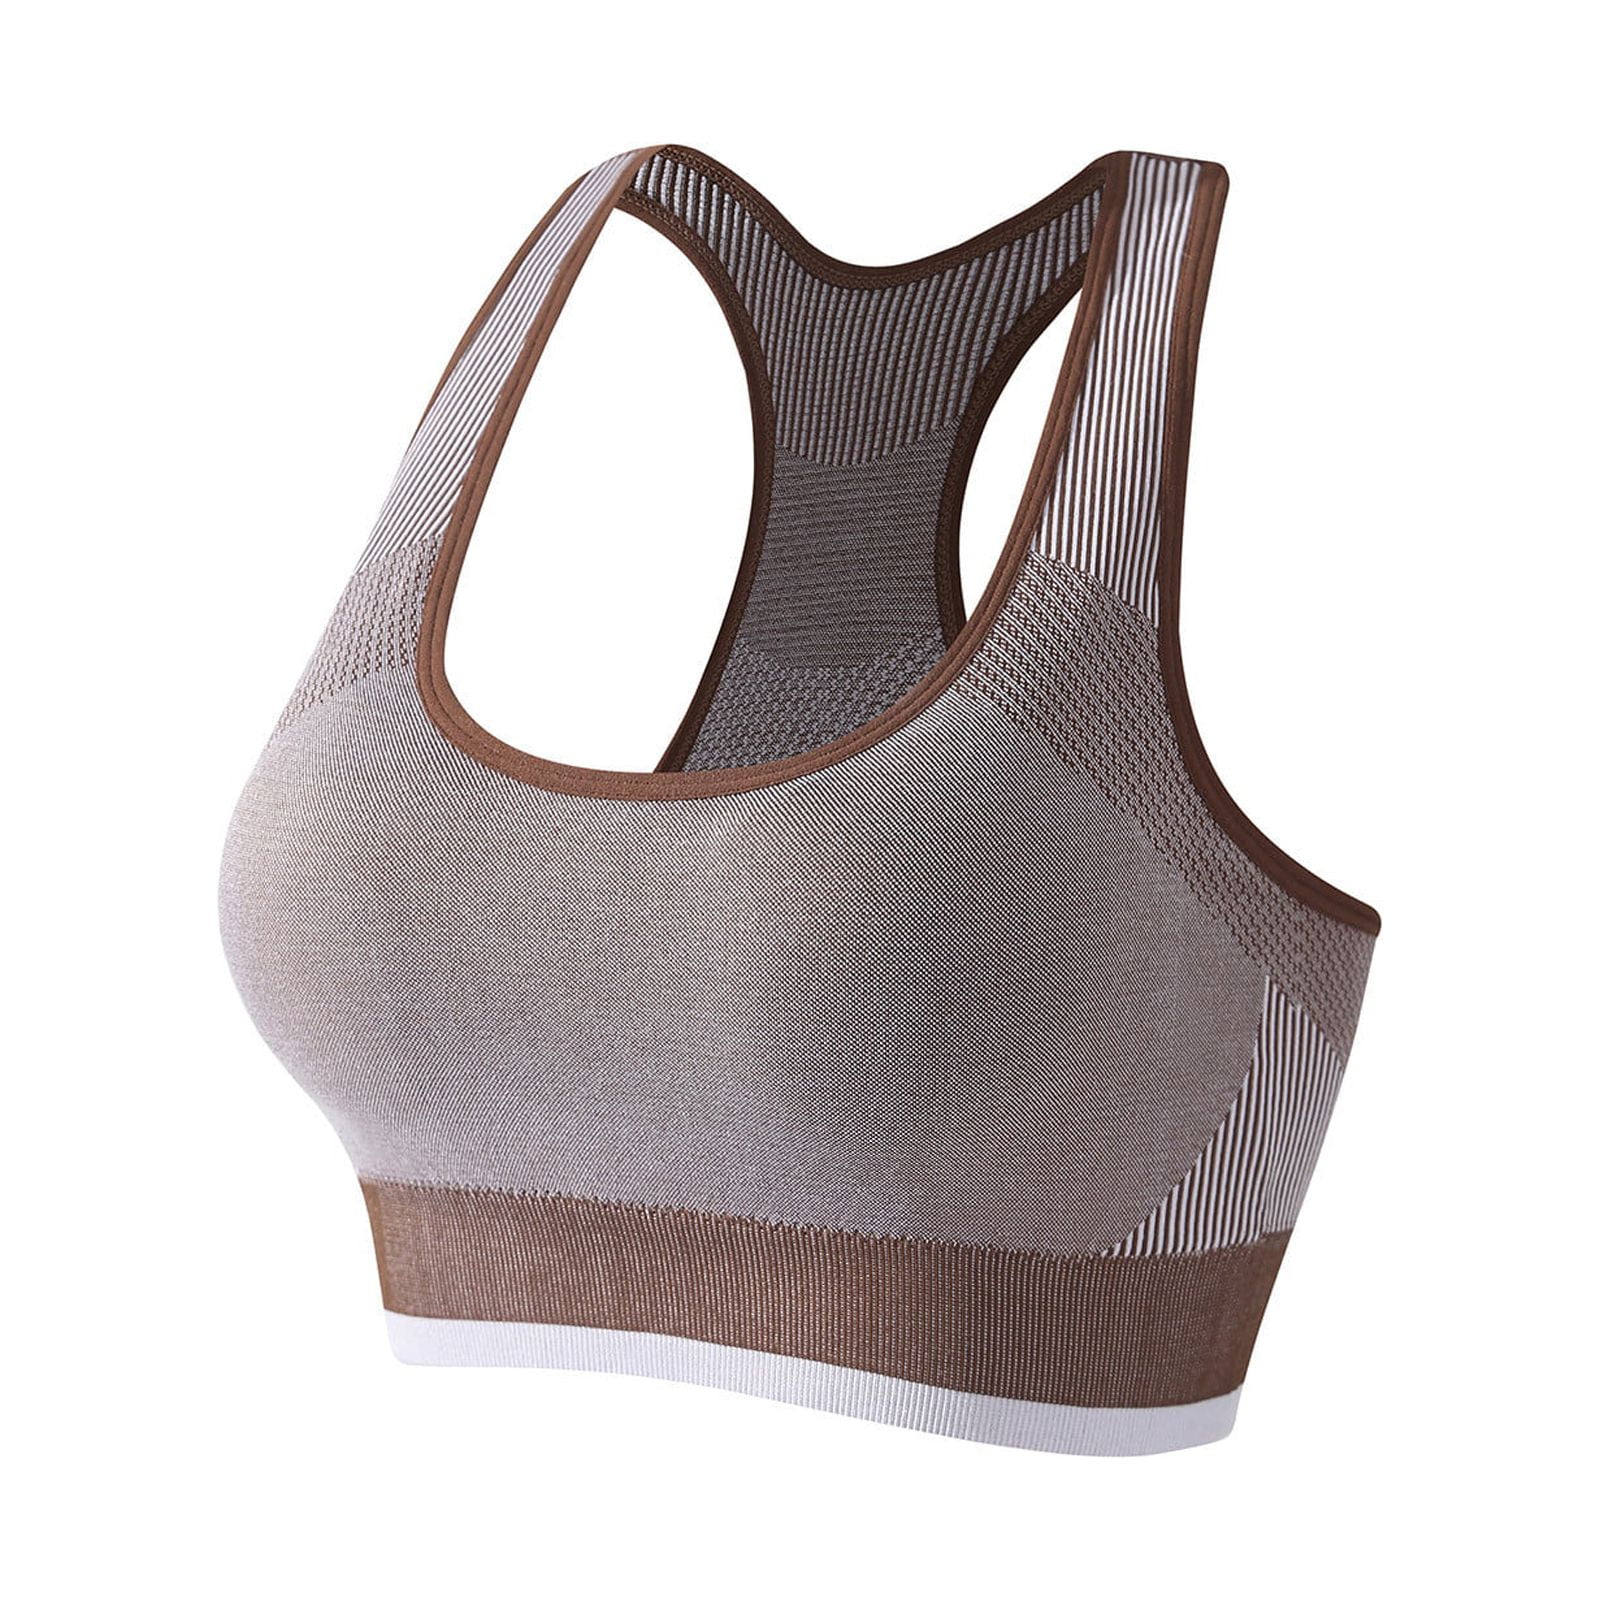 Dreemee Women's Sports Brassiere (Model: SB-1103, Color:Dark Grey,  Material: 4D Stretch) at Rs 425.00, Ladies Innerwear